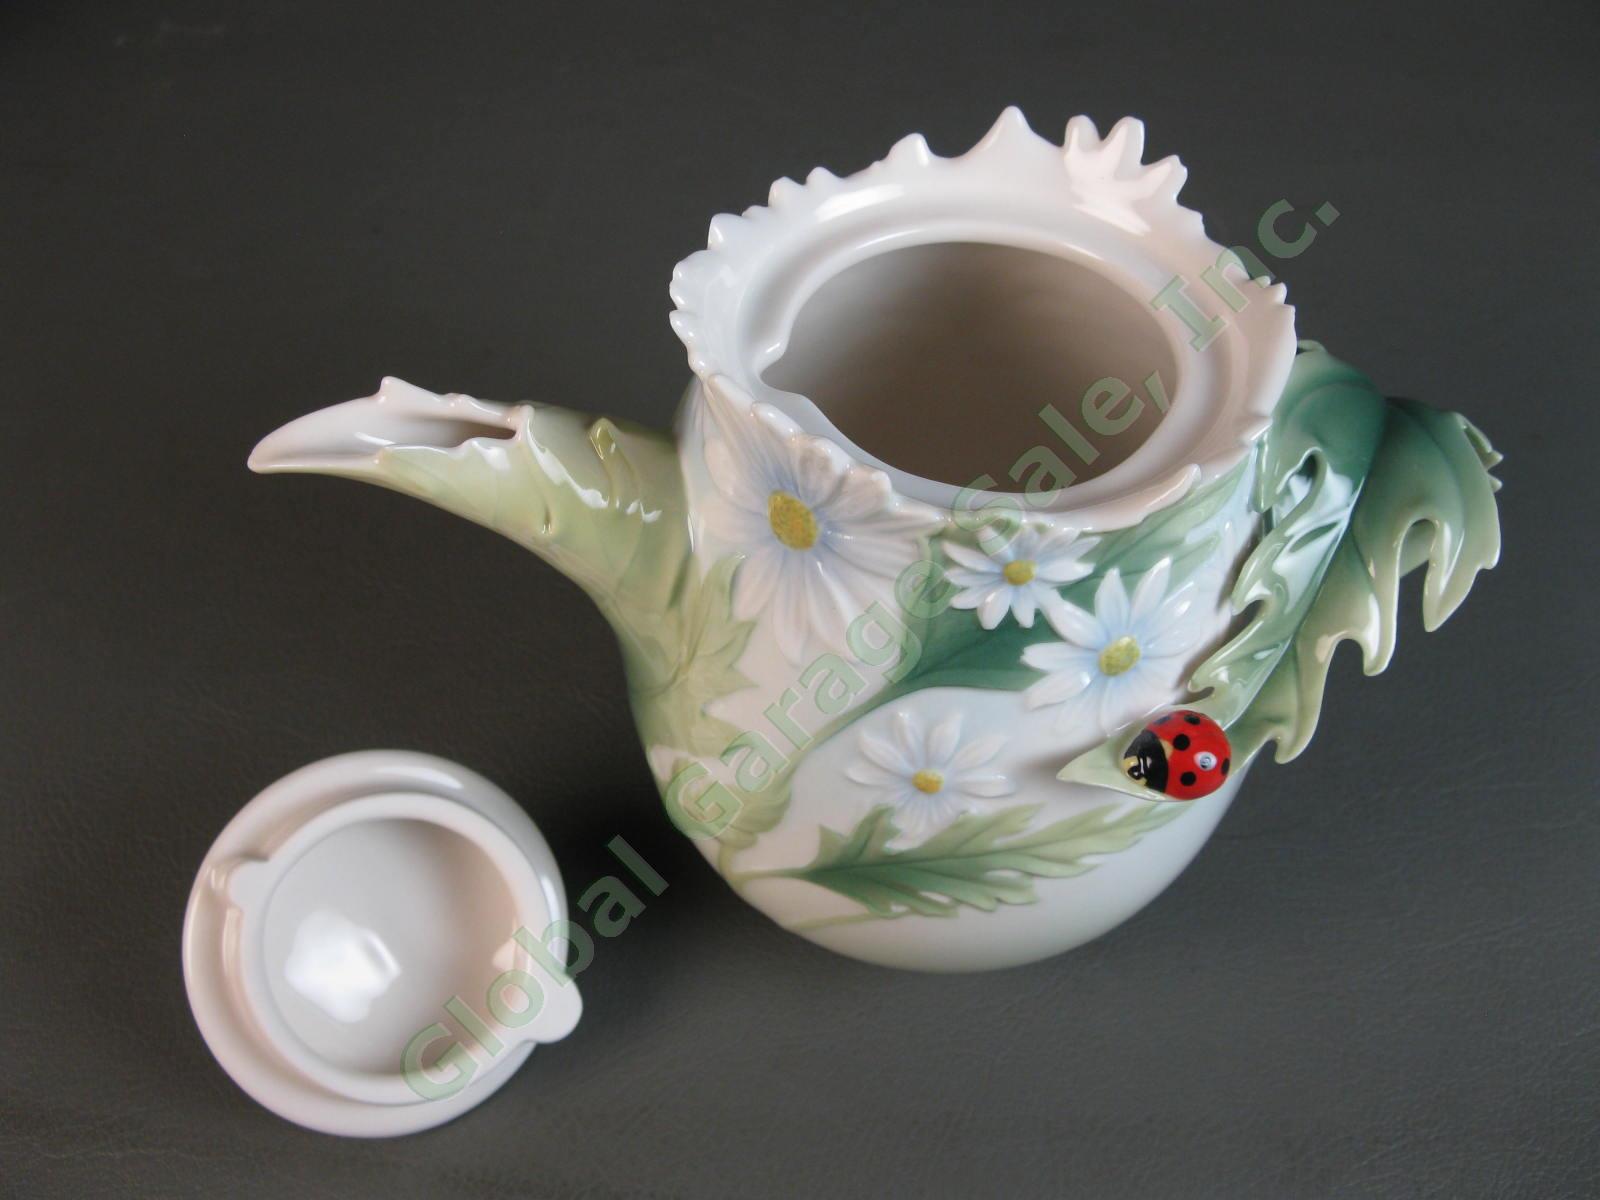 Franz Porcelain Ladybug Design Collection Teapot Cover Coffee Tea Pot FZ00300 NR 7